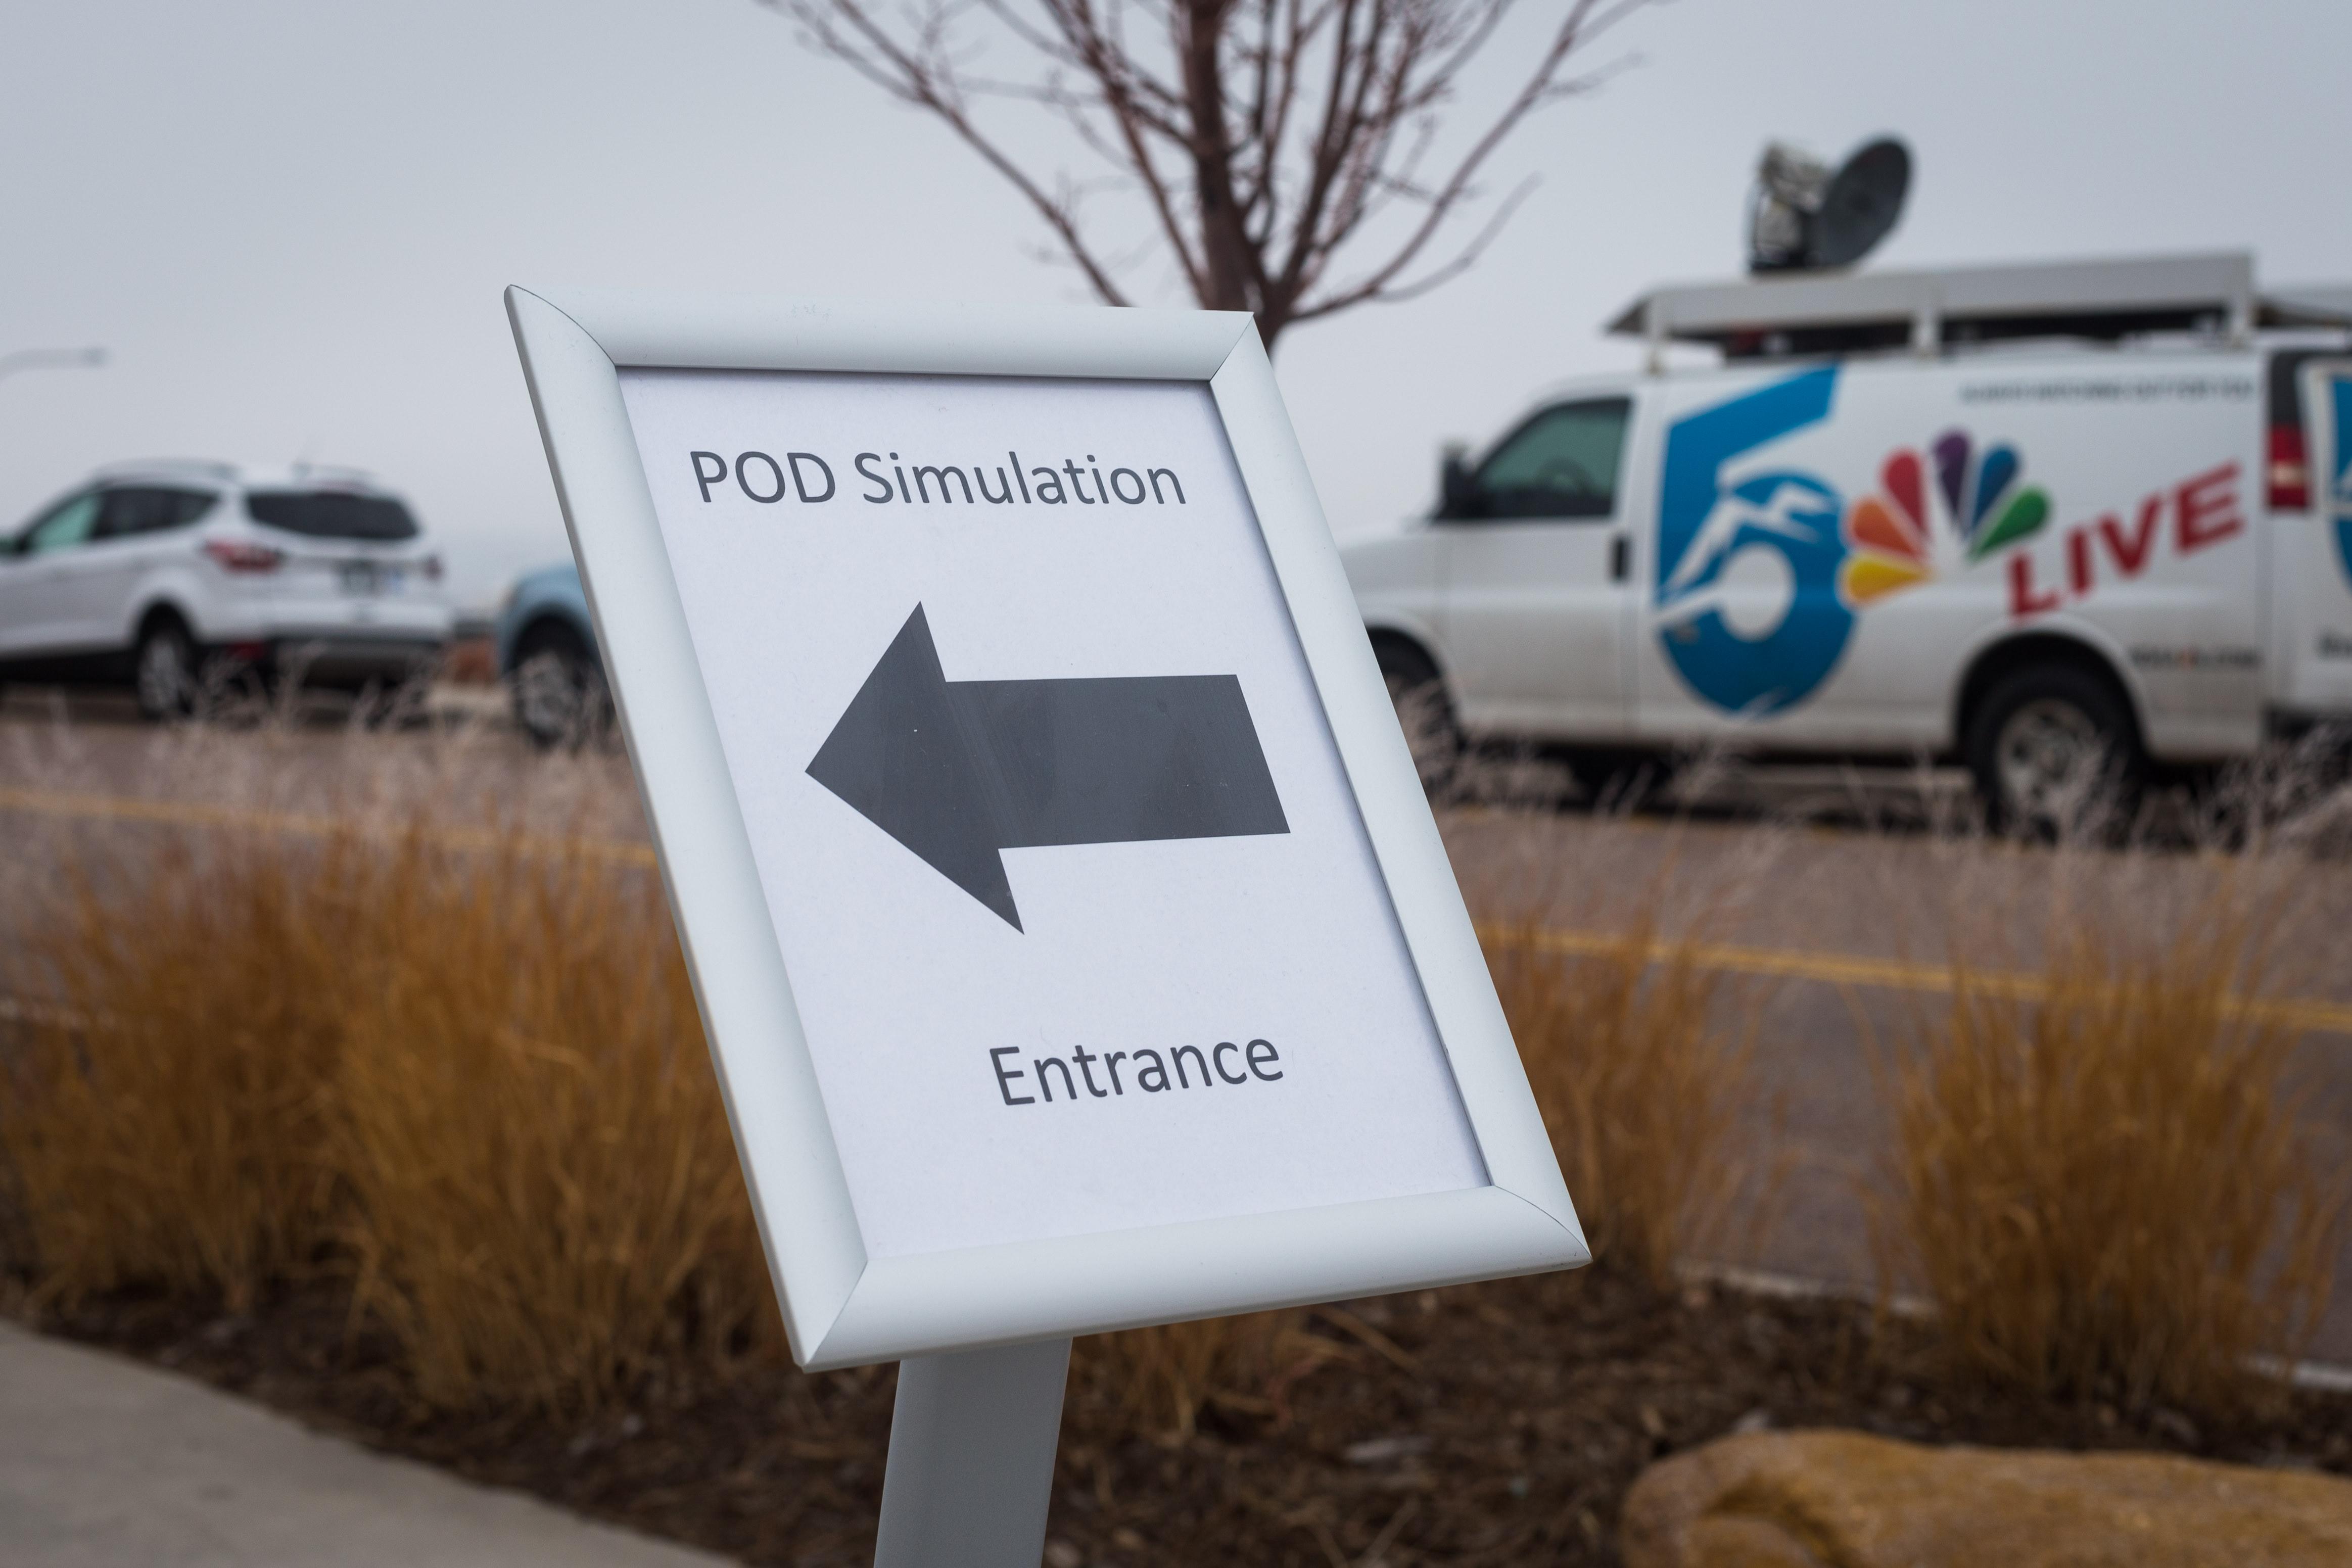 Sign that says "POD simulation entrance"